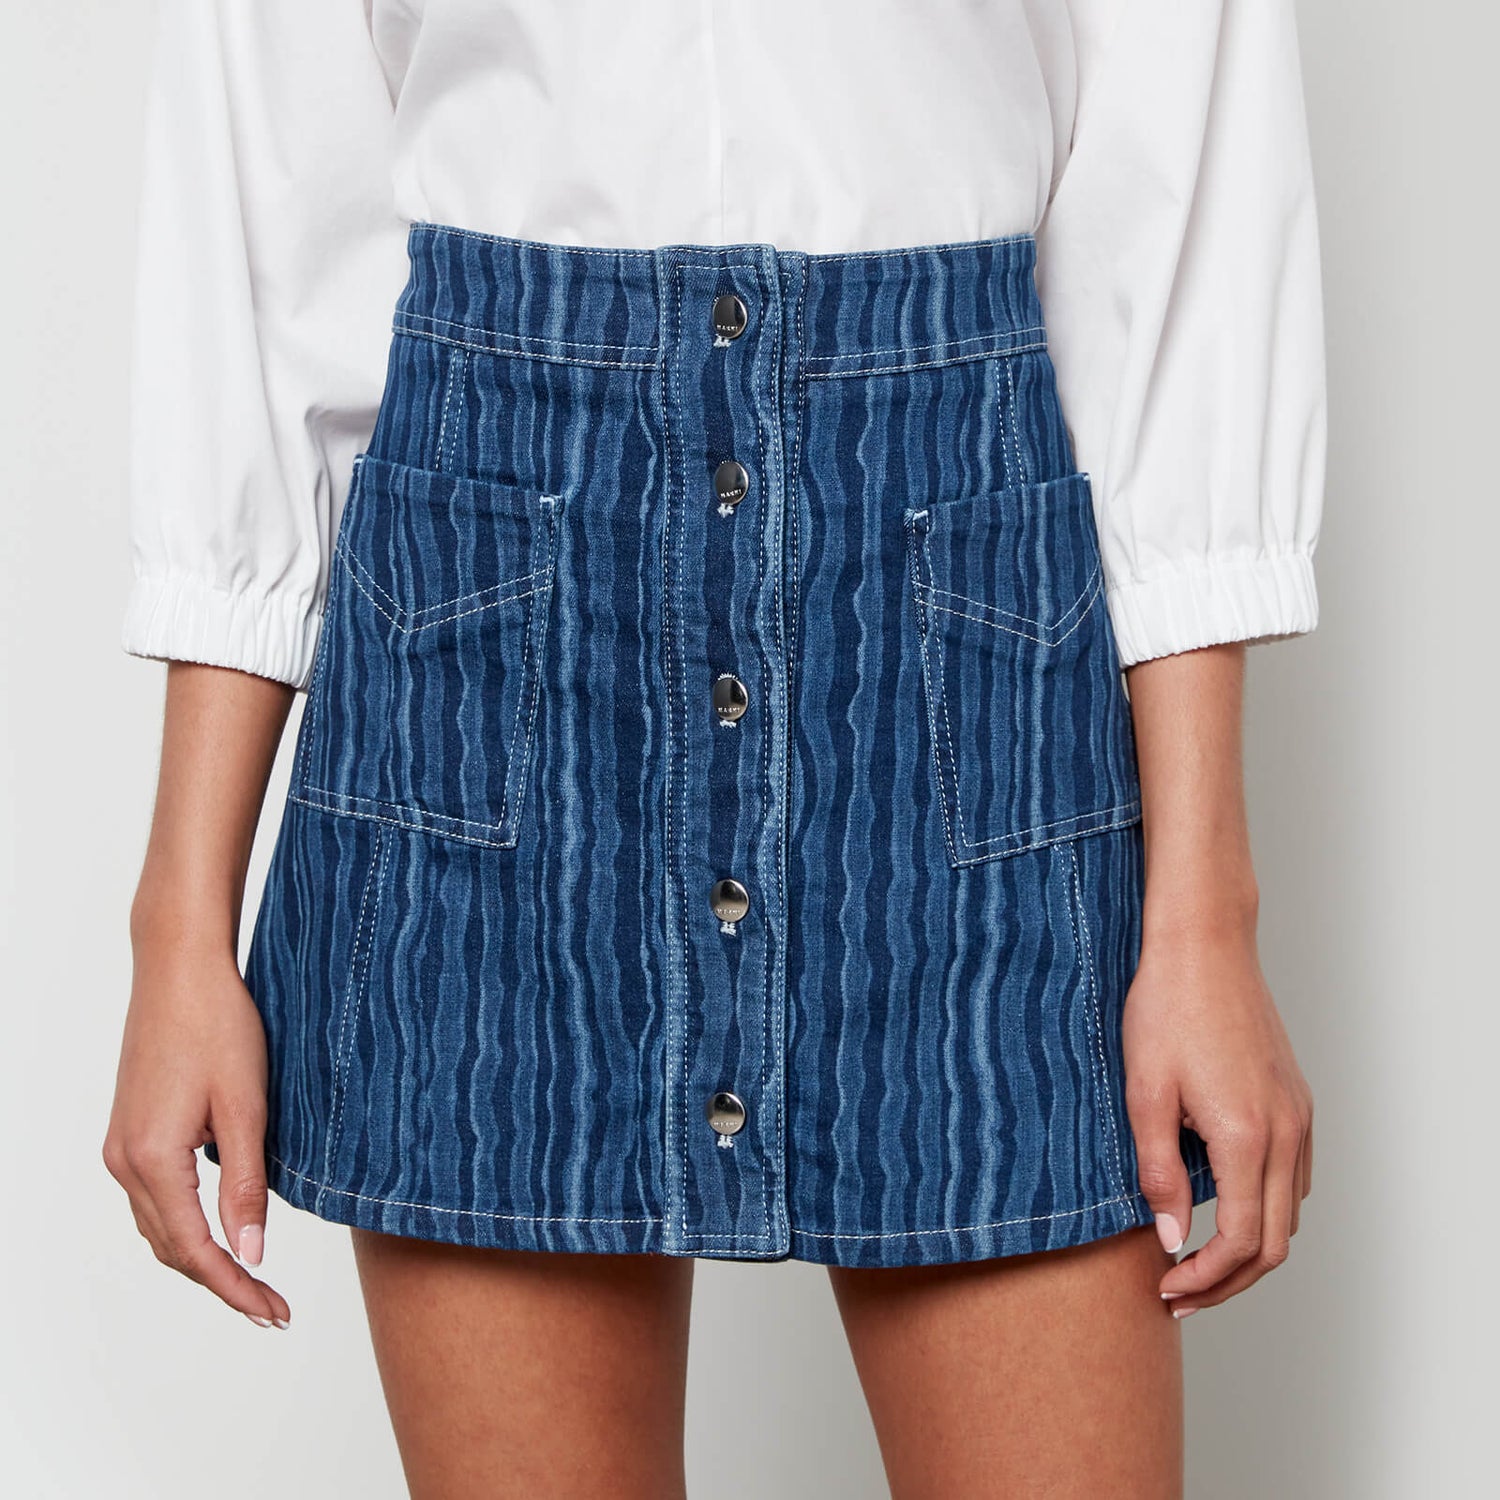 Marni Women's Mini Skirt - Blublack - IT40/UK8